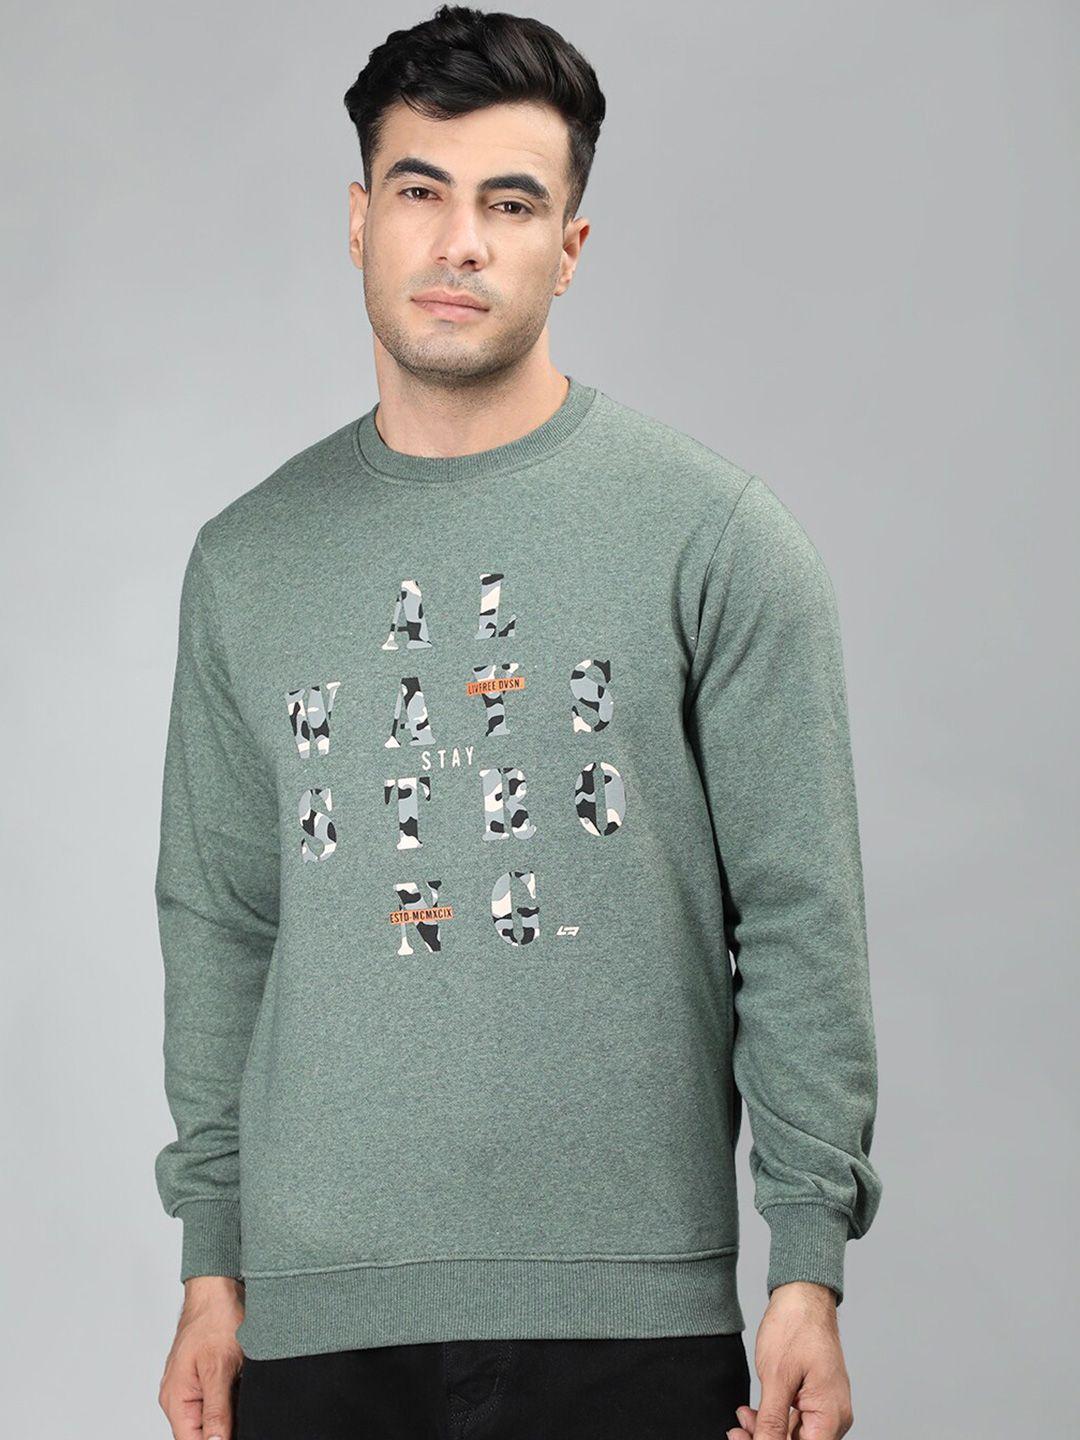 neva typography printed cotton pullover sweatshirt